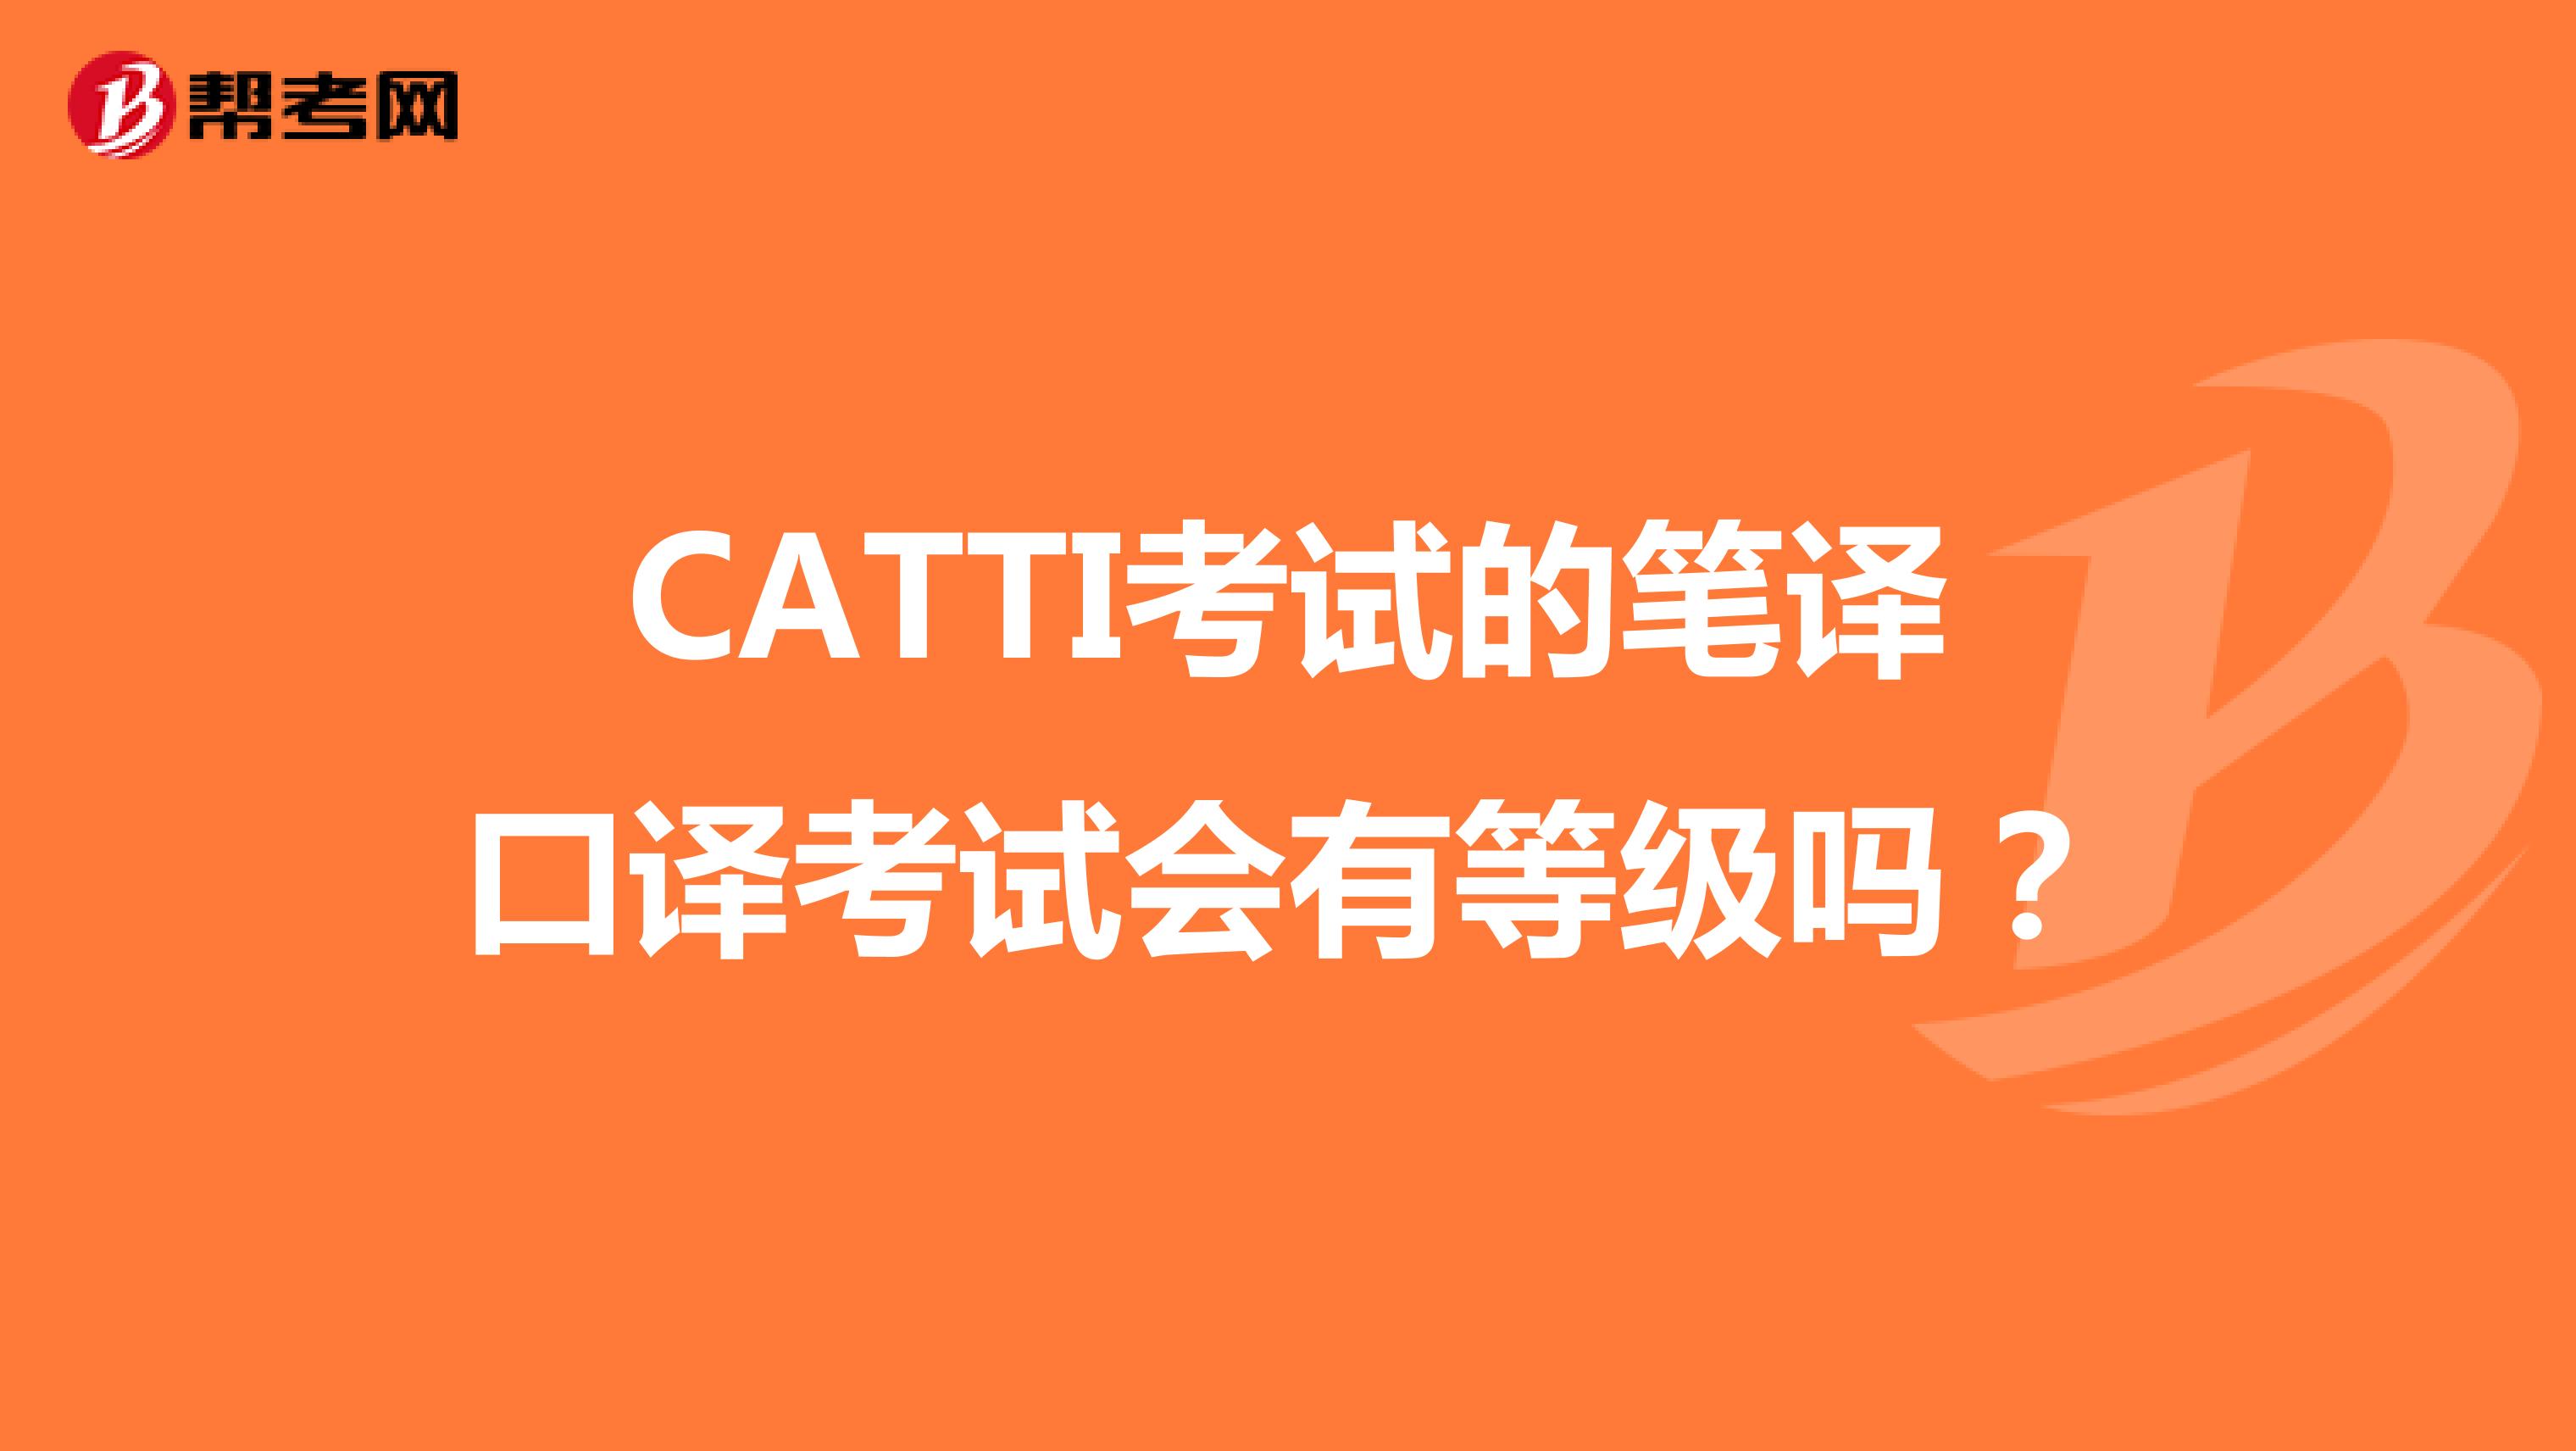 CATTI考试的笔译口译考试会有等级吗？